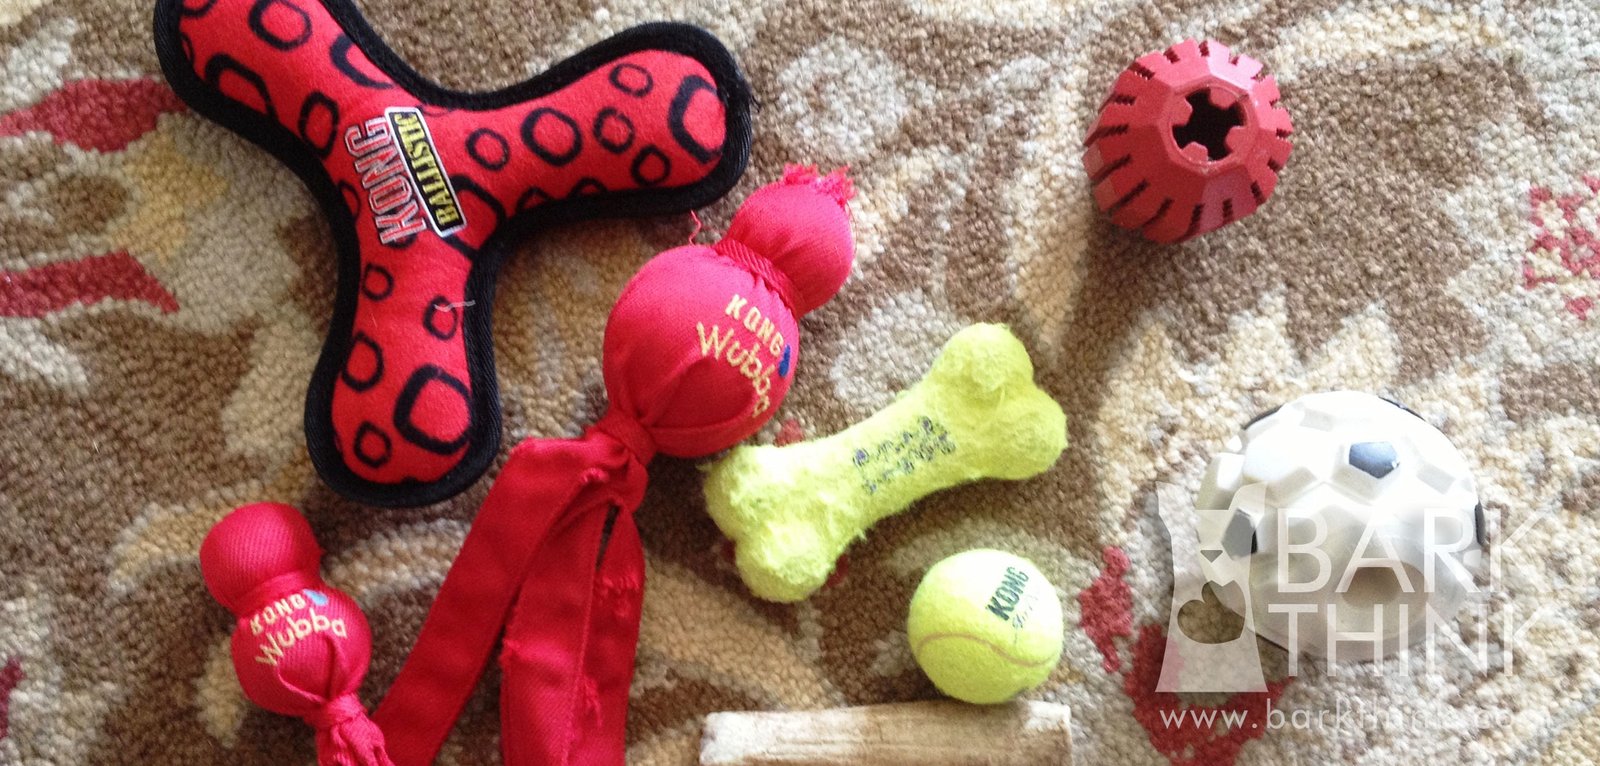 What are your favorite superchewer dog toys?? #notanad #kongdog #makef